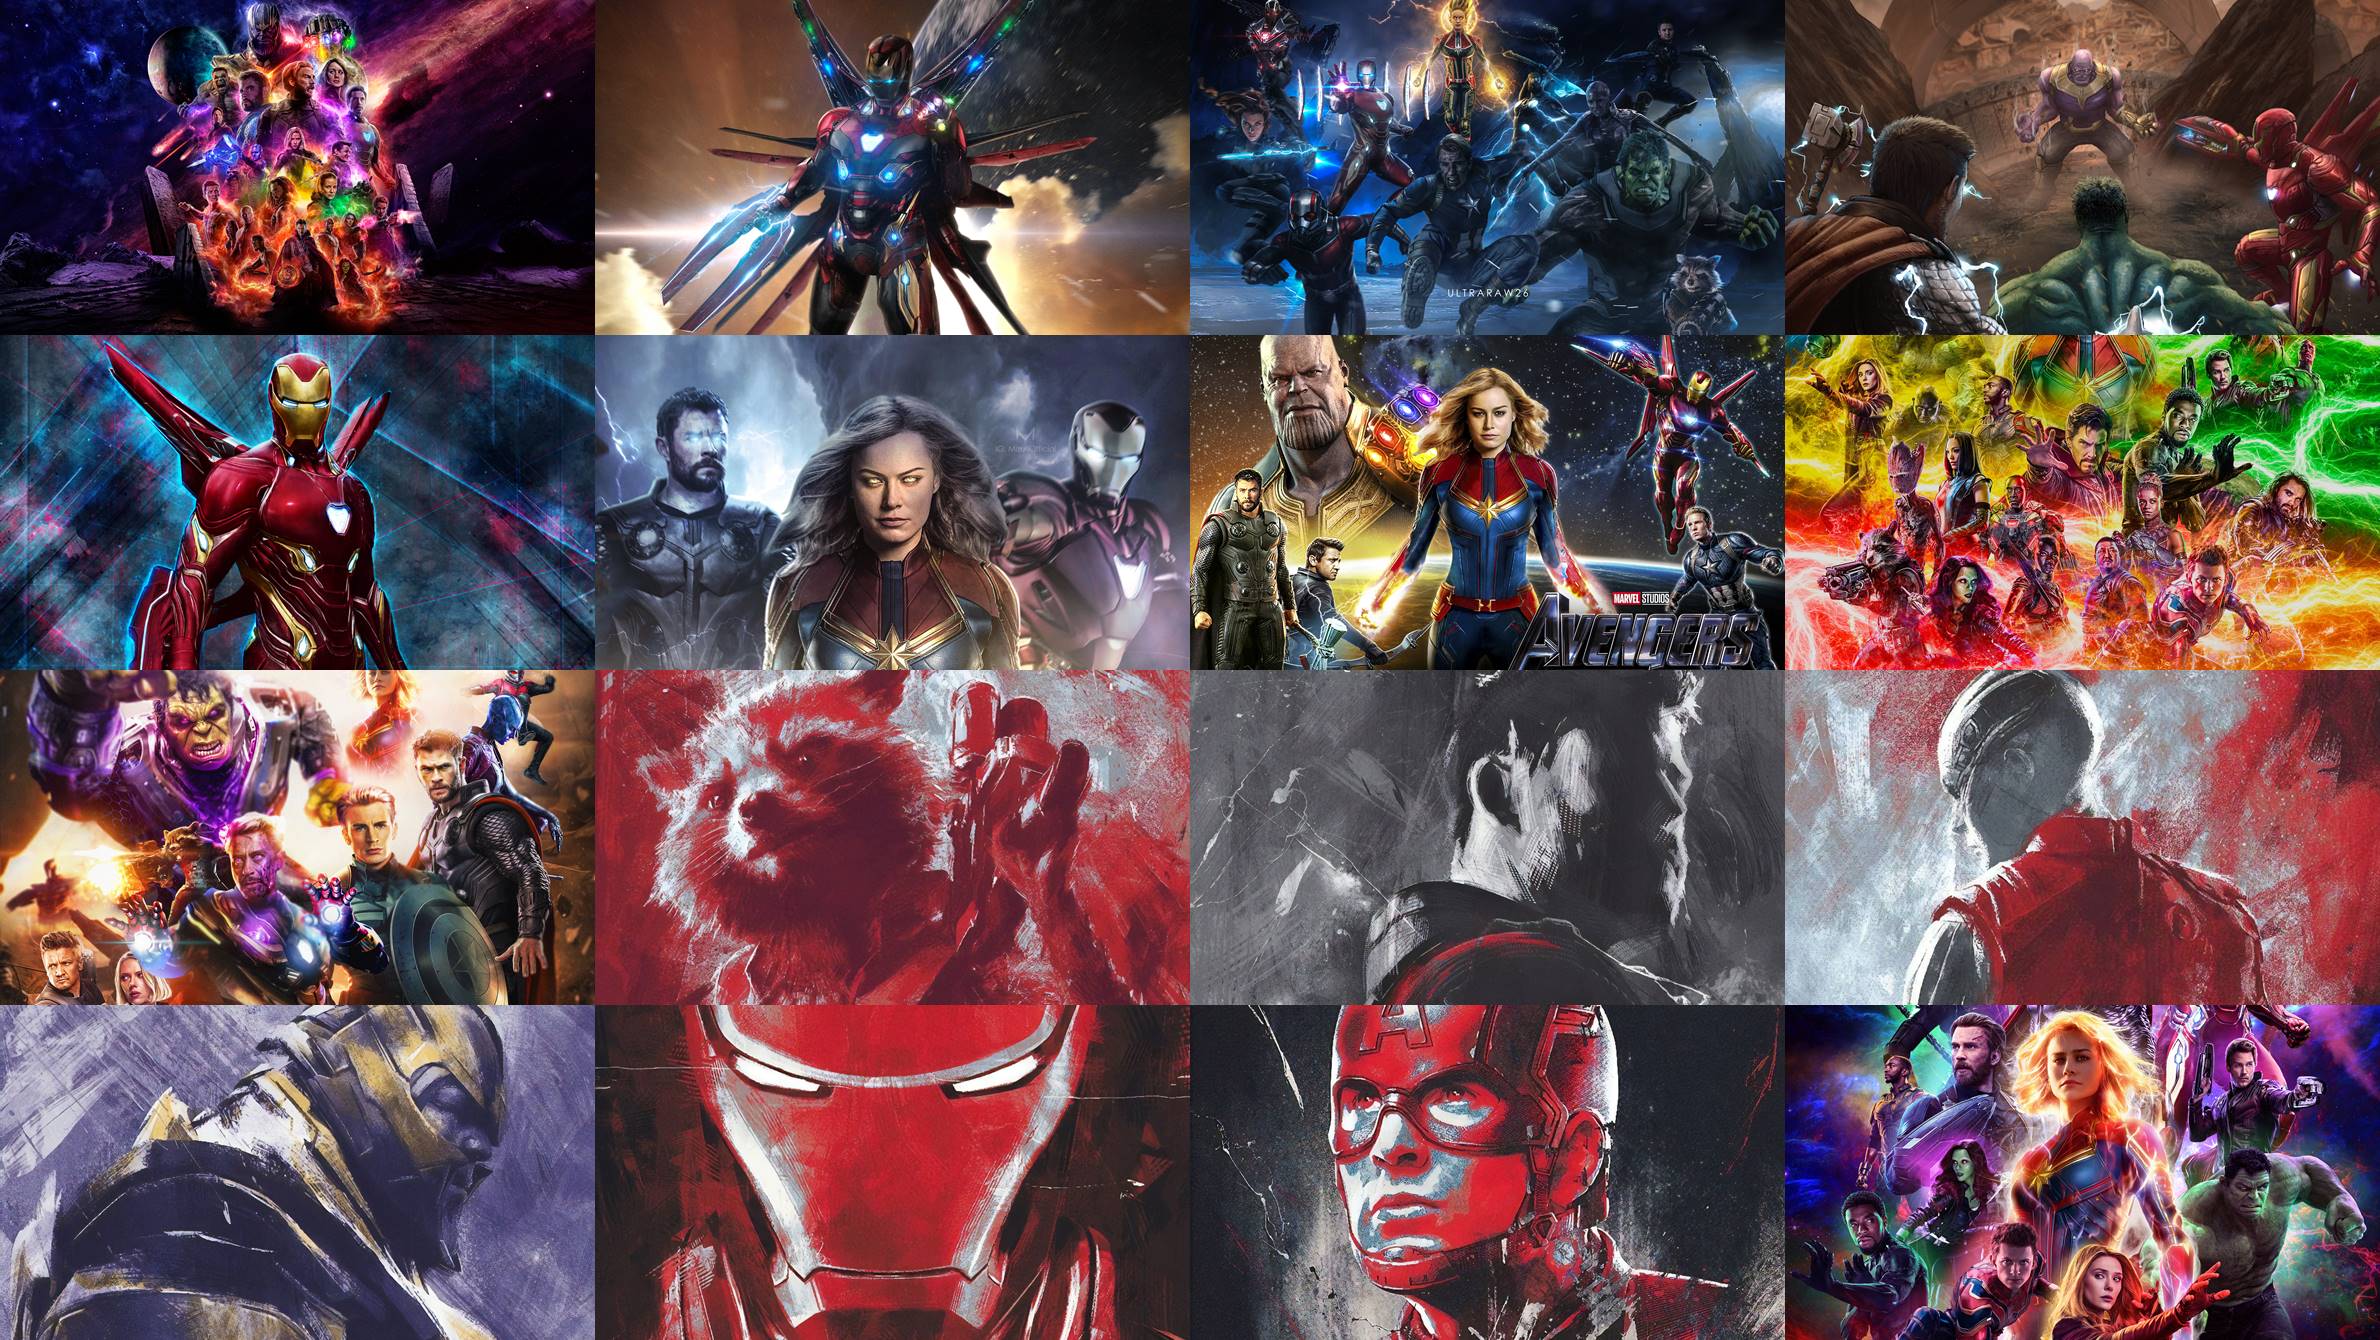 30 Best Avengers Endgame Wallpapers Full HD & 4K Ultra HD | TechBeasts